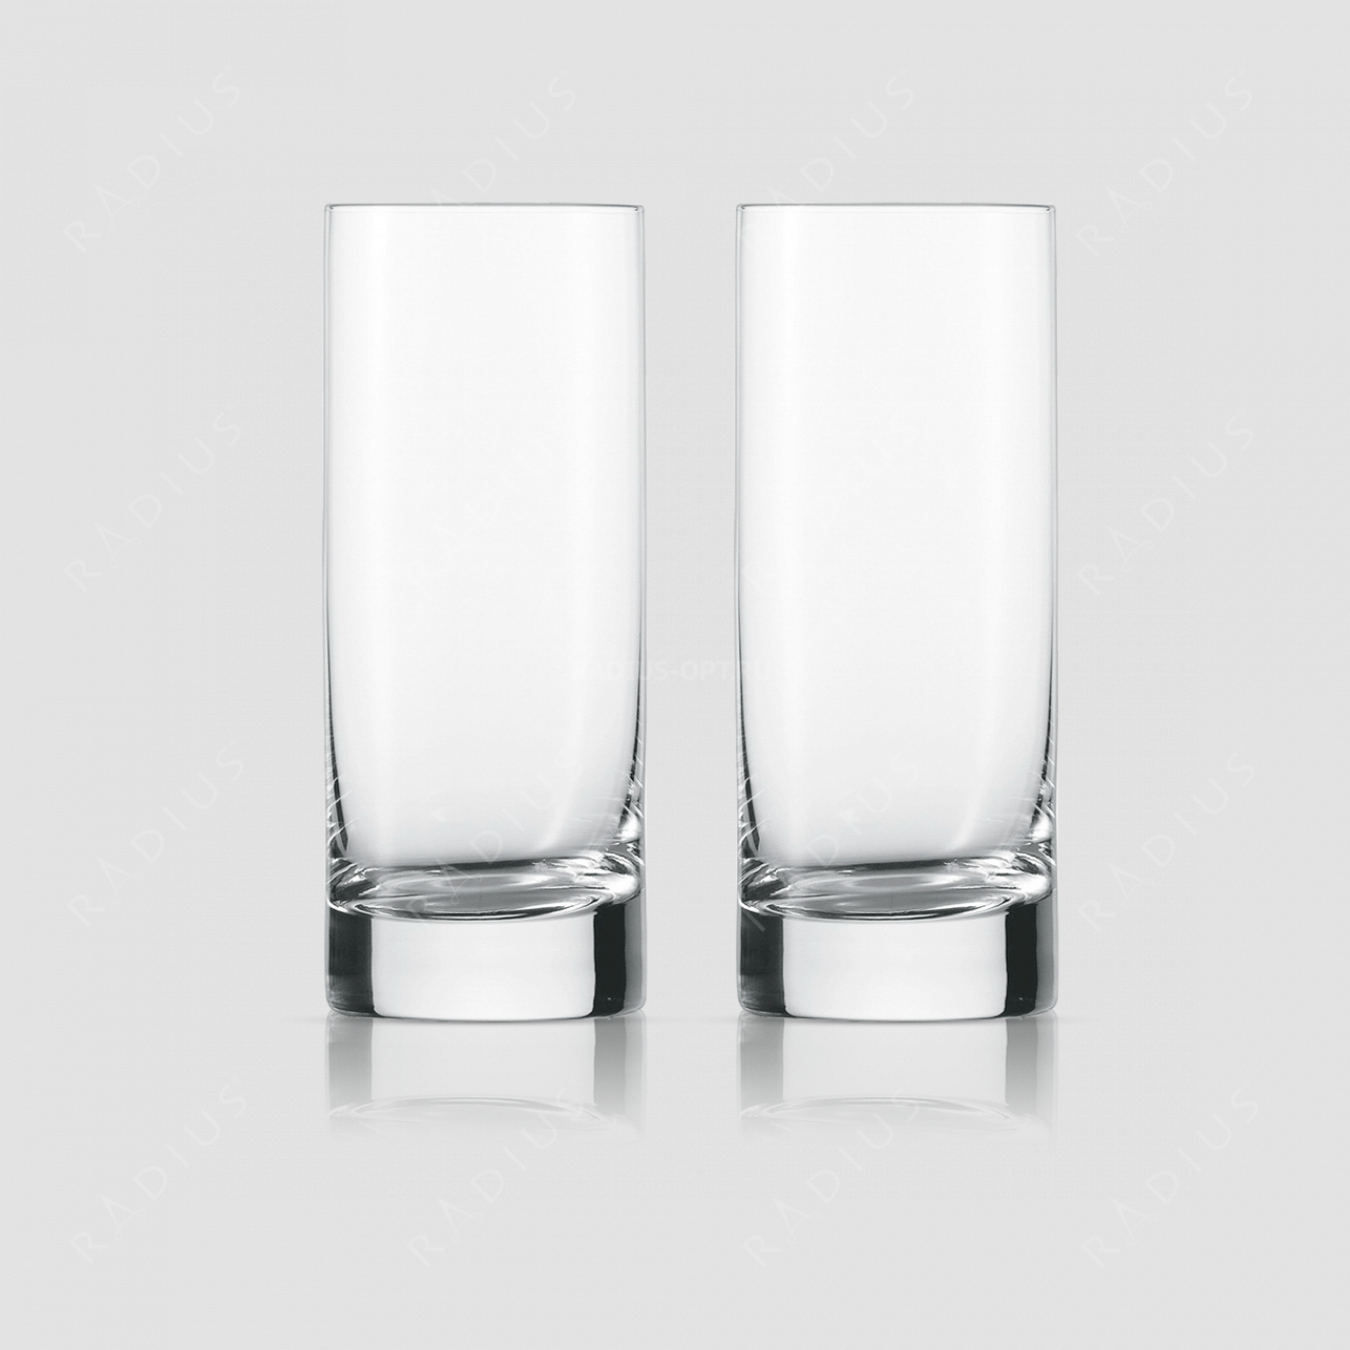 Набор стаканов для коктейля, объем 347 мл, 4 шт, серия Tavoro, ZWIESEL GLAS, Германия